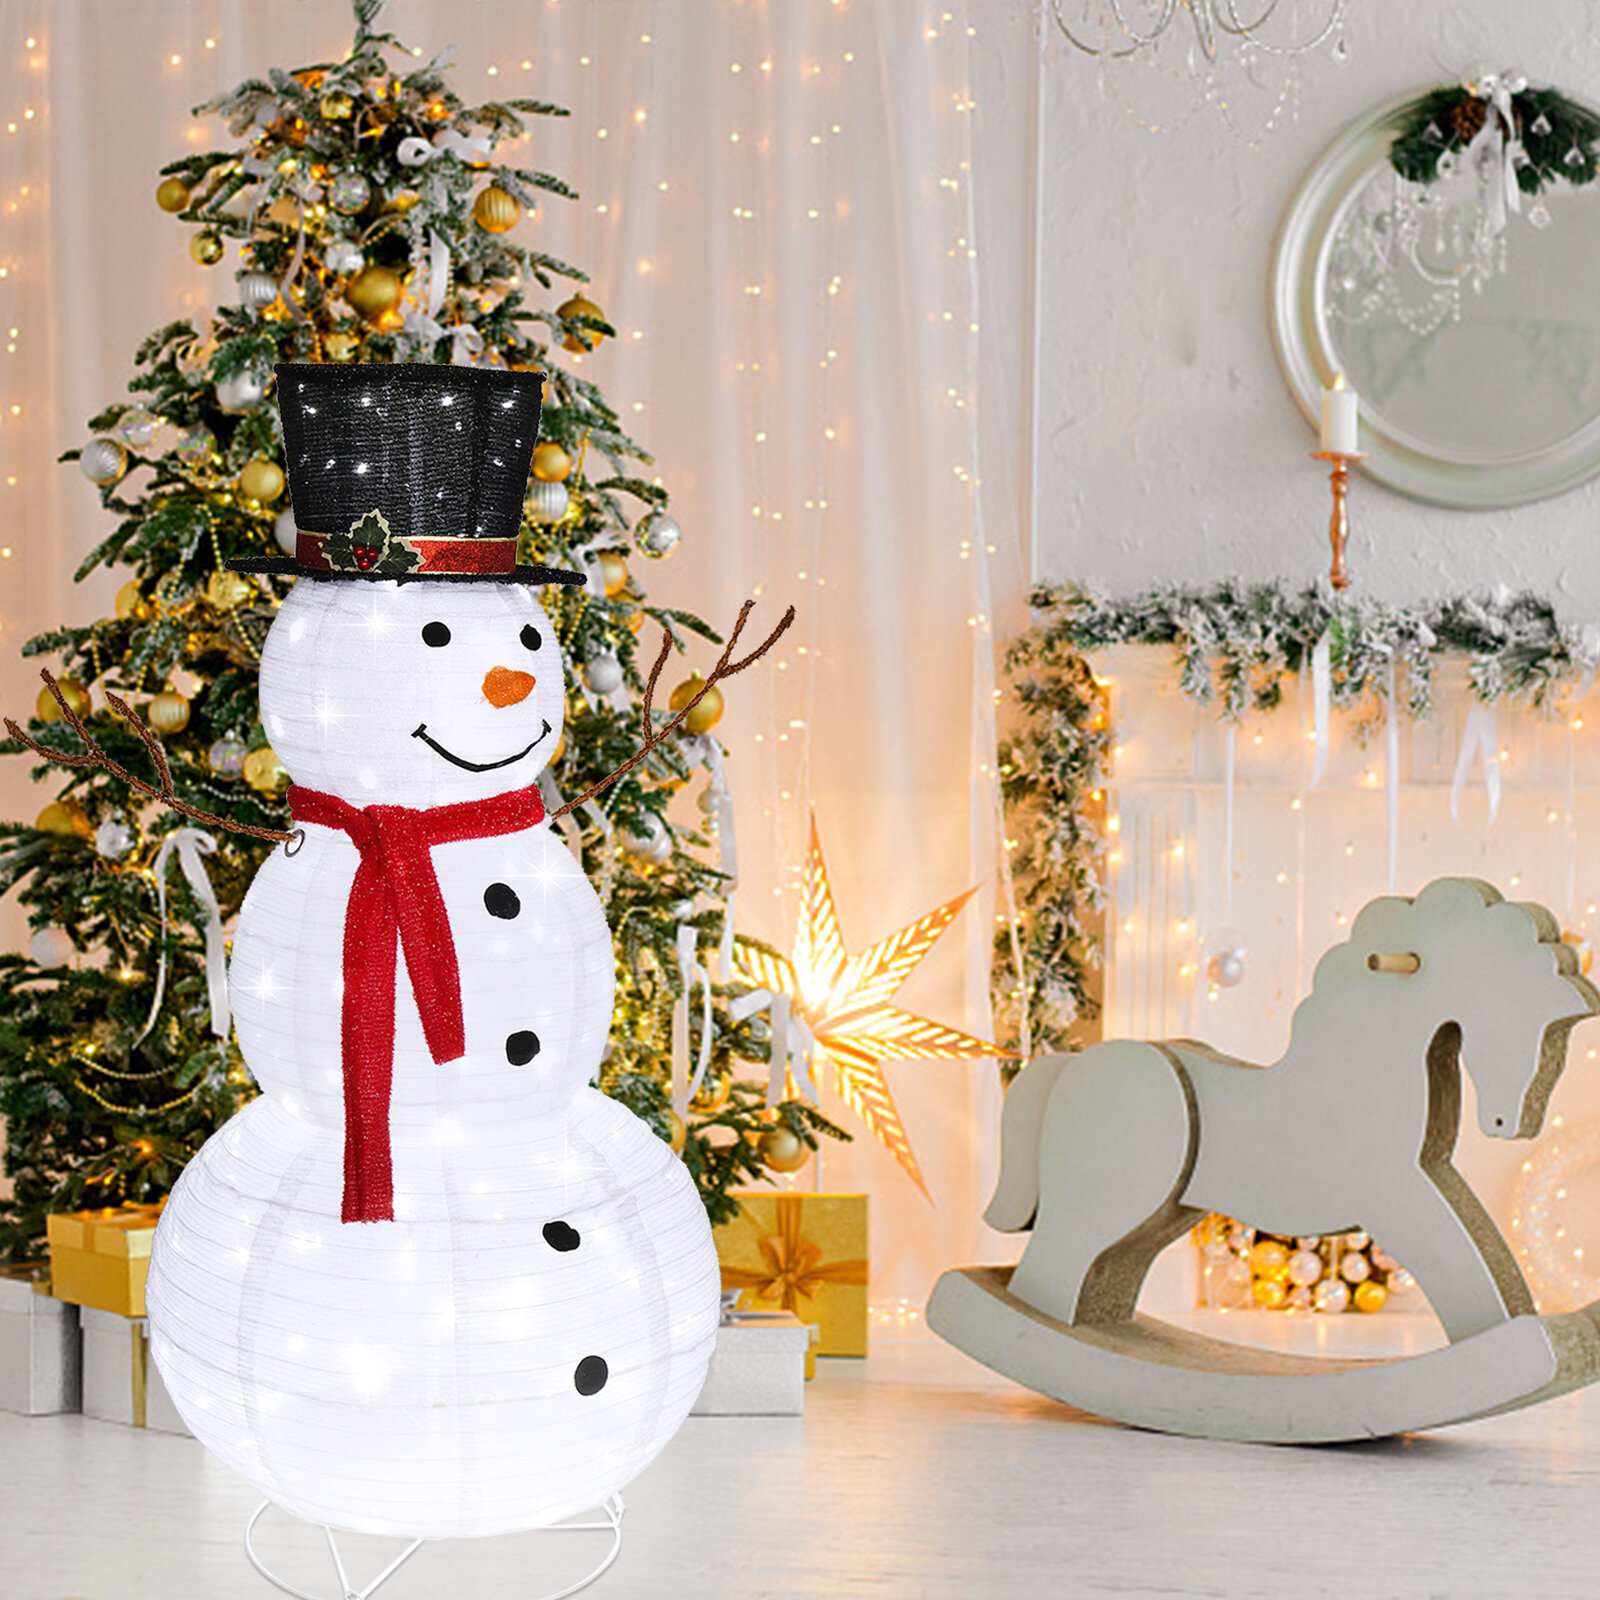 Crochet Kit: Christmas Tree Decorations: White - Anchor - Groves